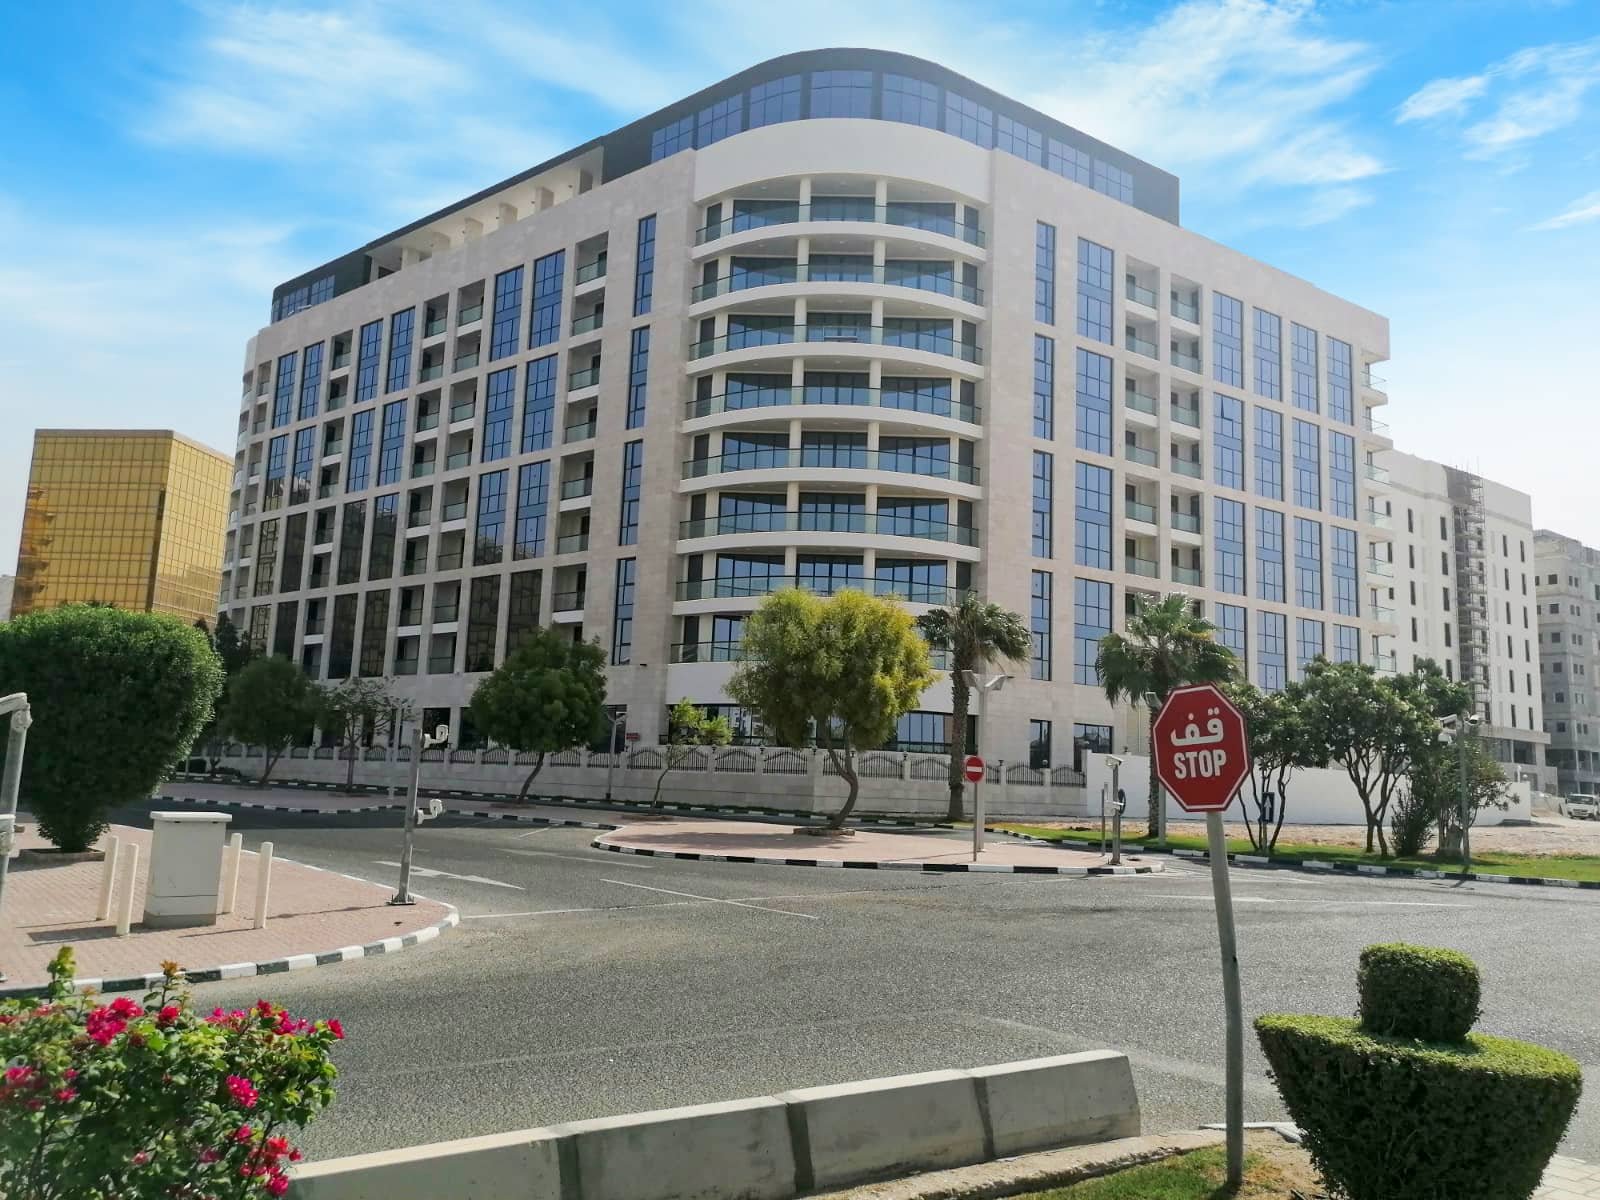 RAWDAT AL KHAIL - HOTEL BUILDING